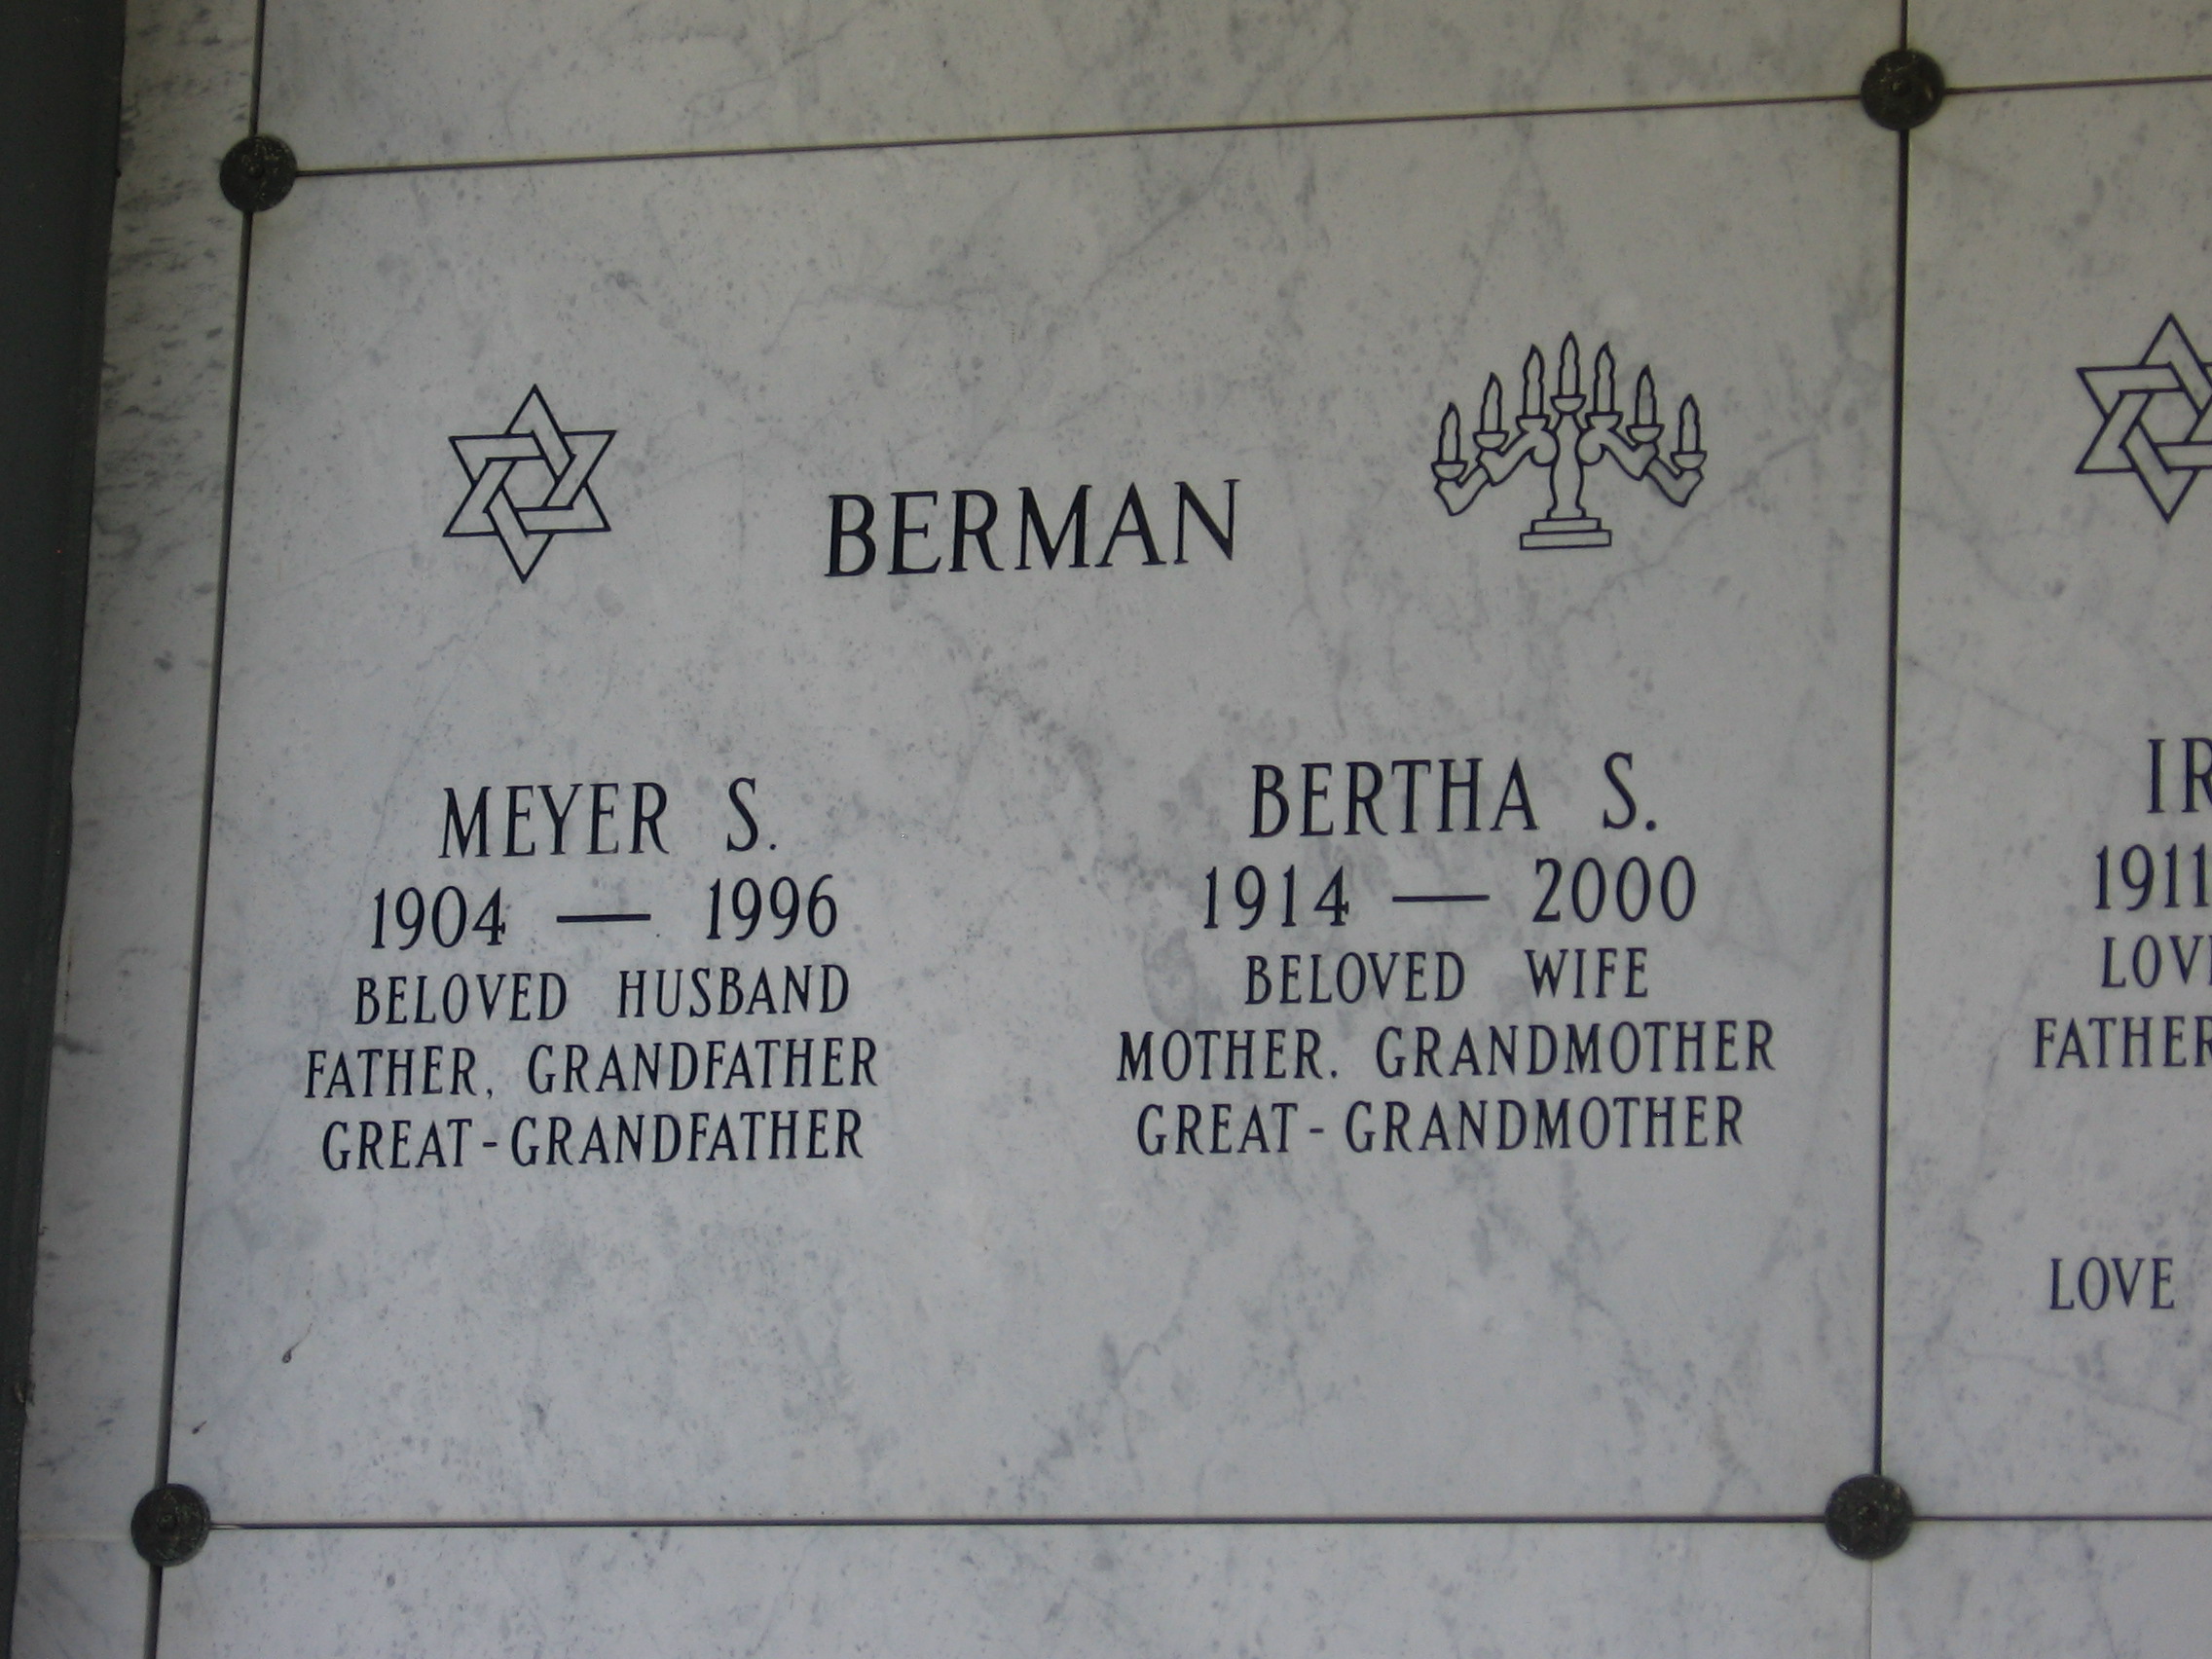 Meyer S Berman